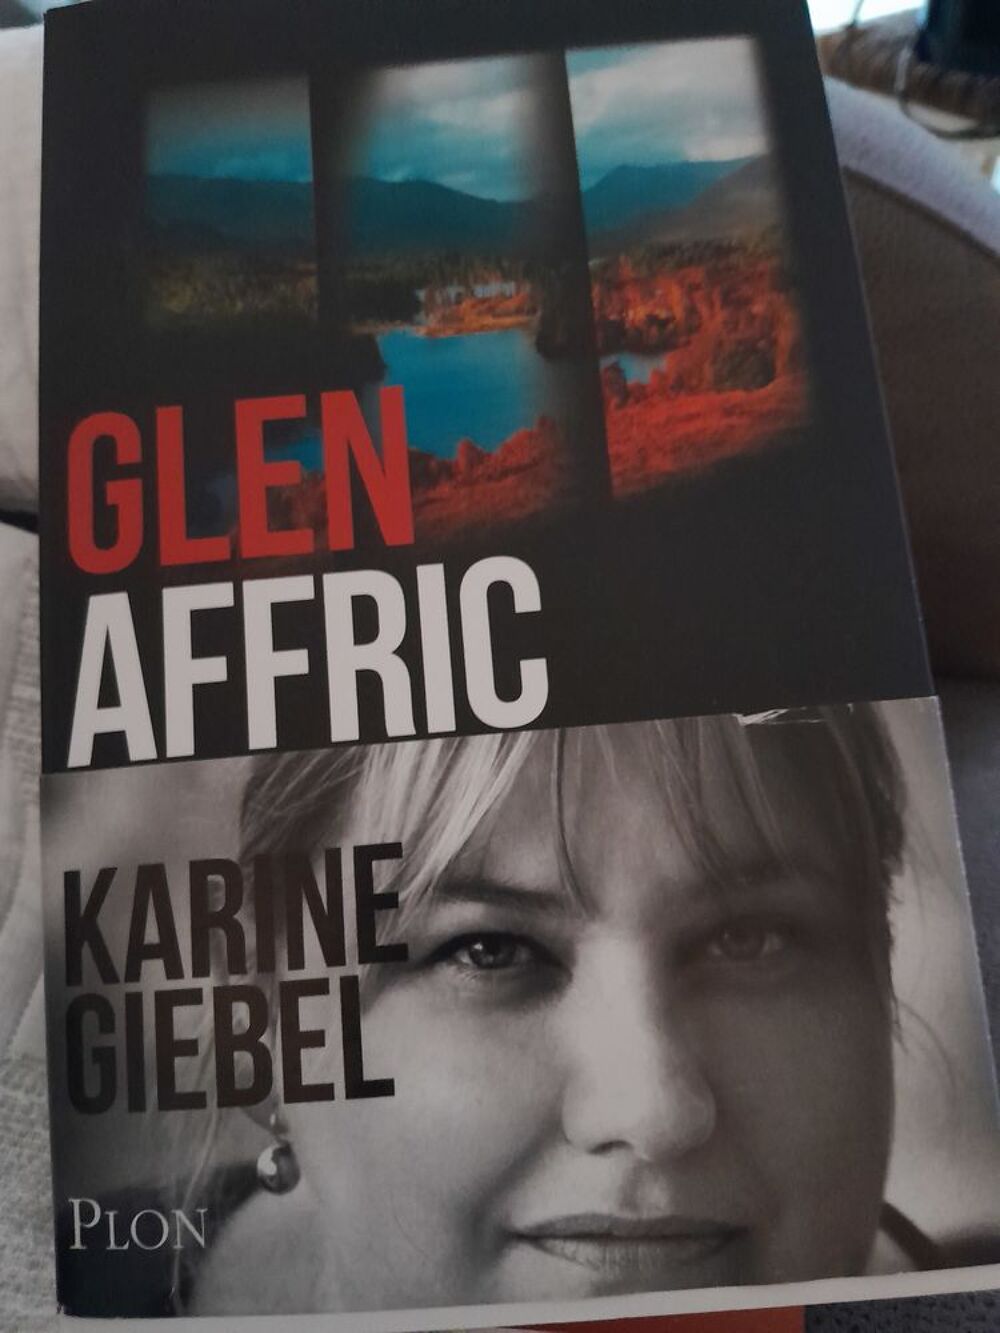 Un polar de Karine Giebel. Livres et BD